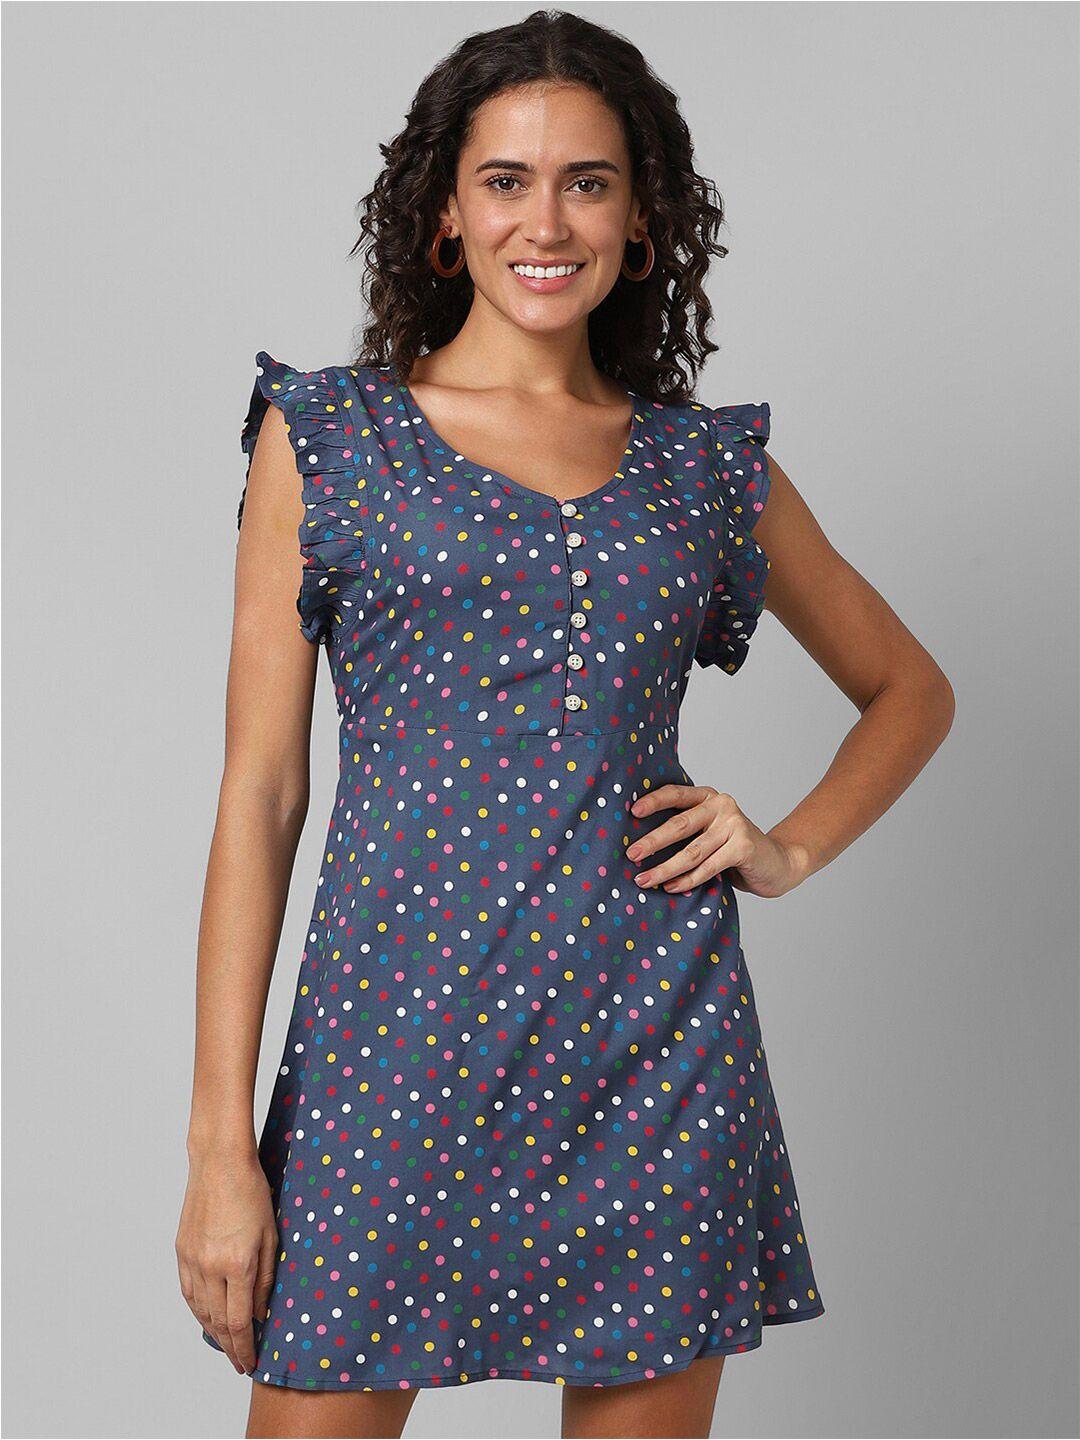 pantaloons polka dot printed flutter sleeves a-line dress